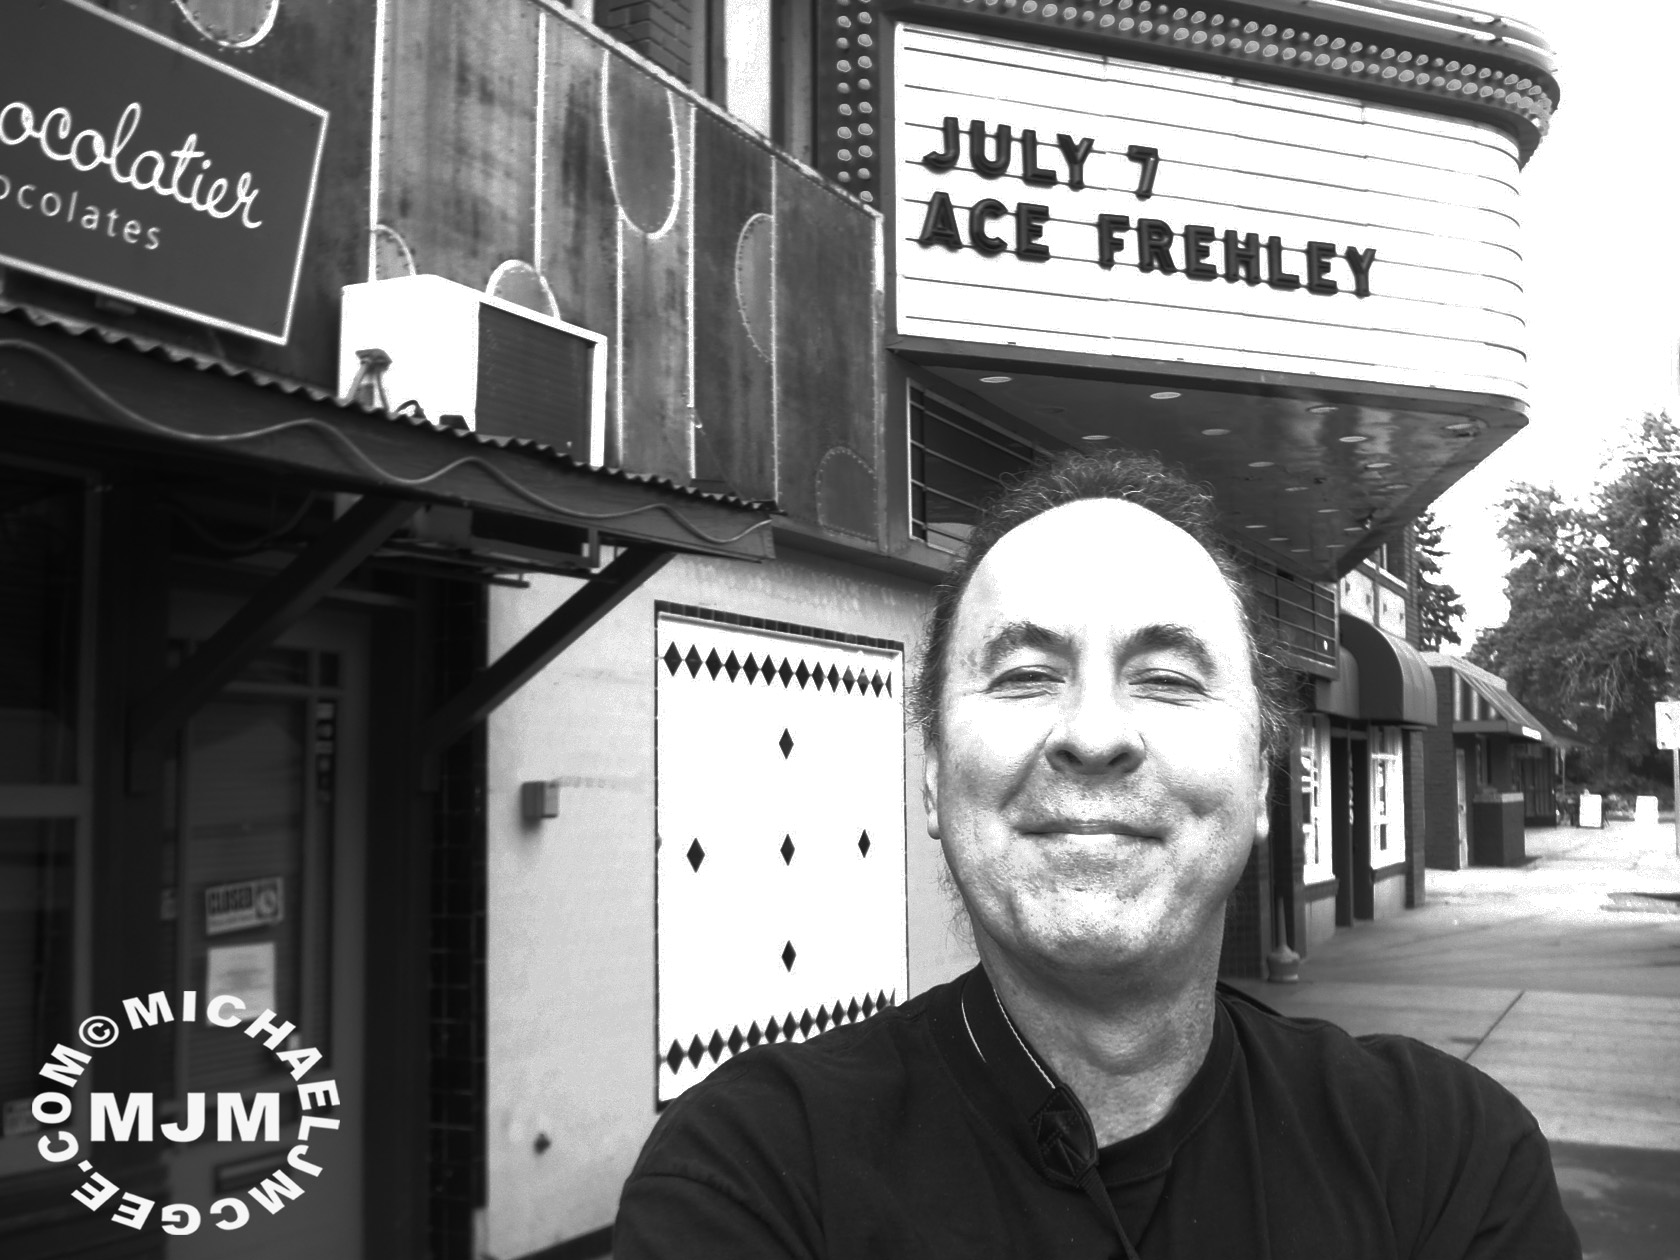 Ace Frehley / michaeljmcgee.com